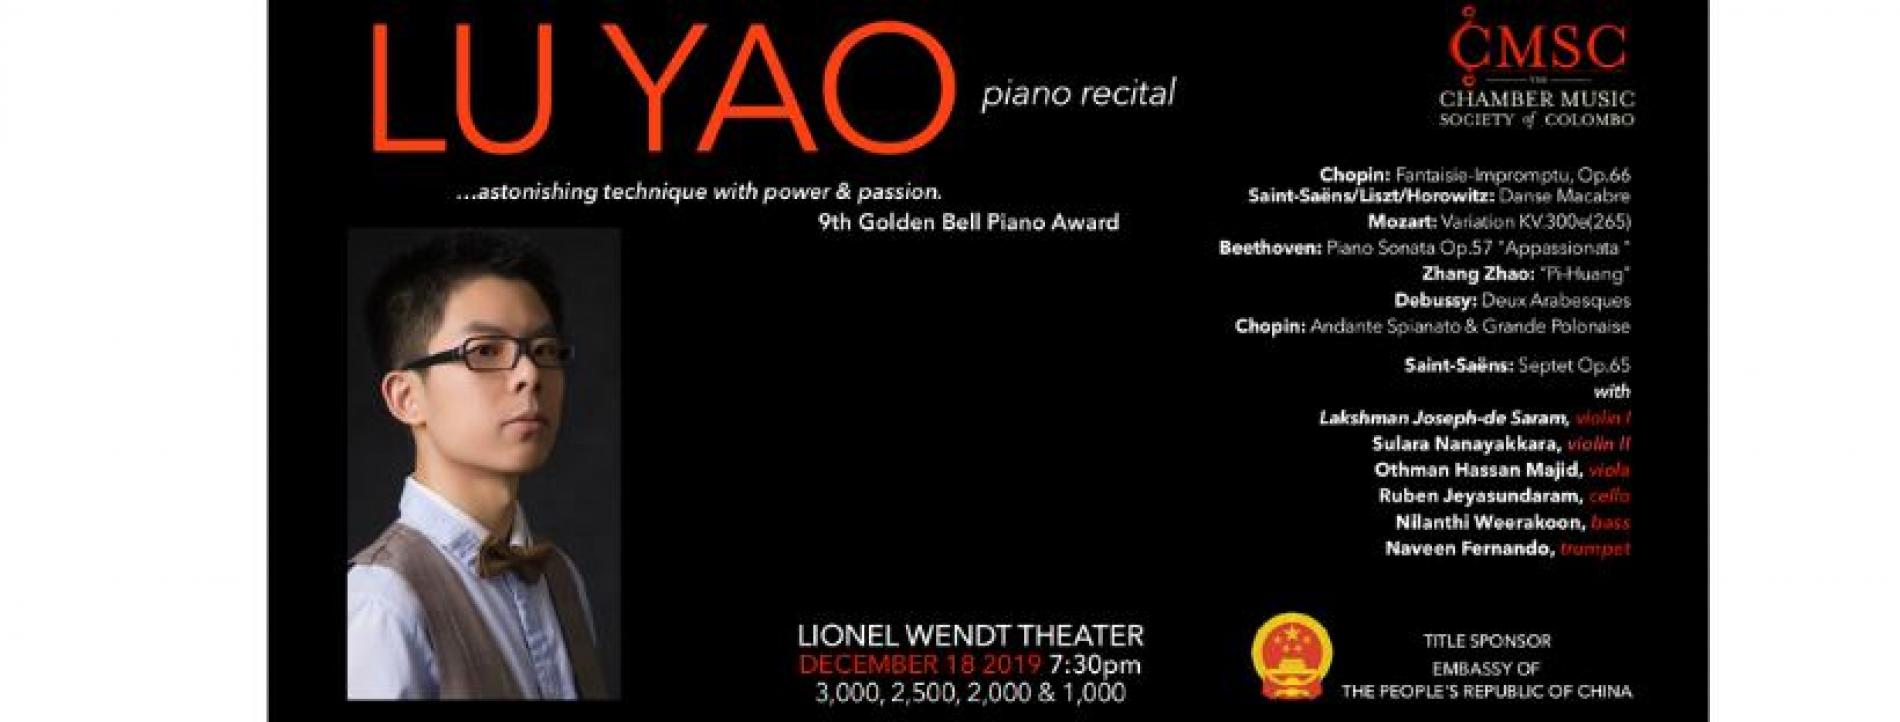 Lu Yao – virtuoso pianist with the CMSC